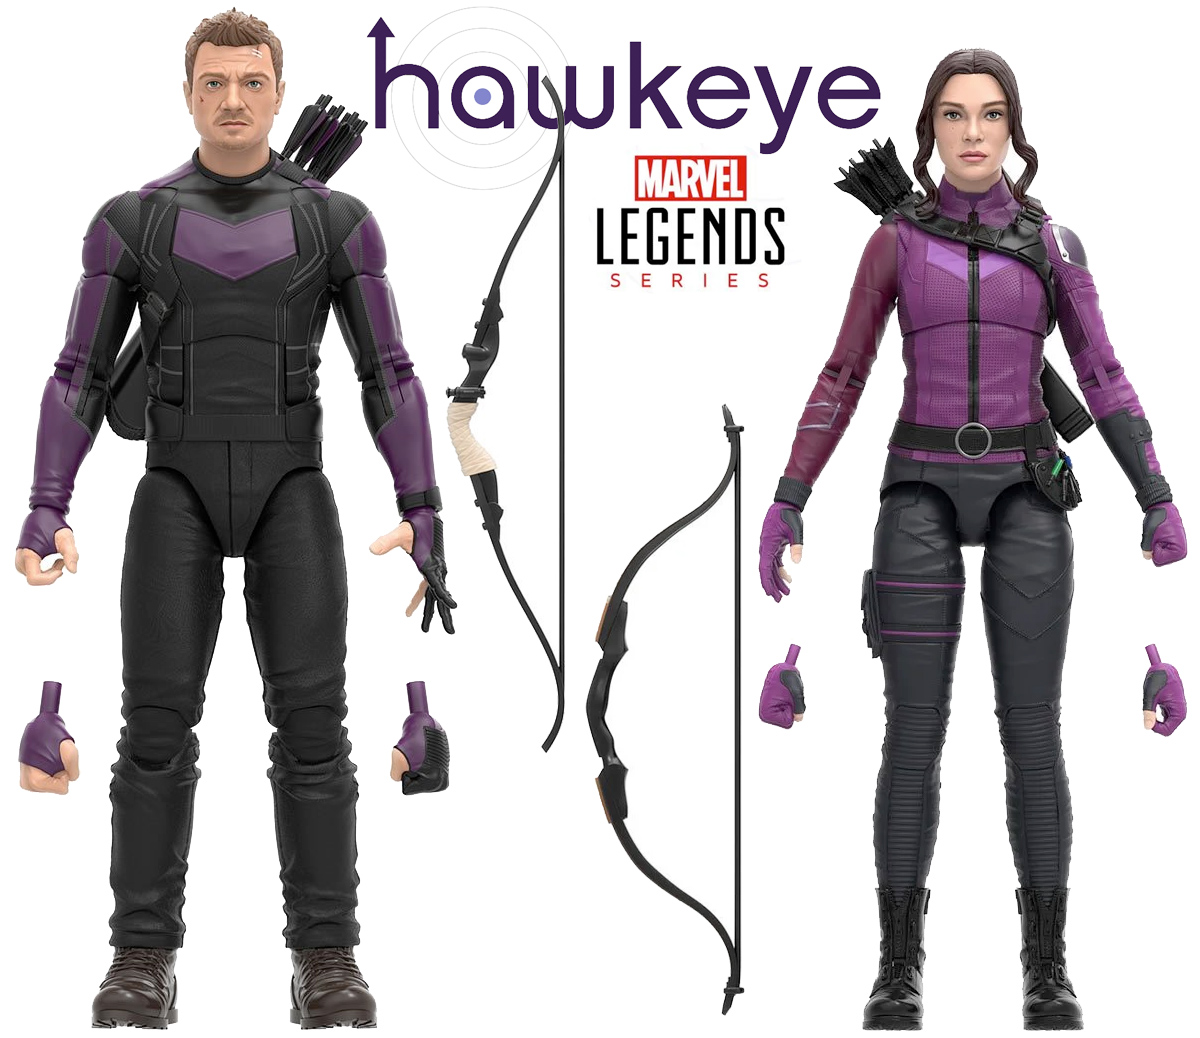 Action Figures da Série Hawkeye: Clint Barton e Kate Bishop (Disney+)